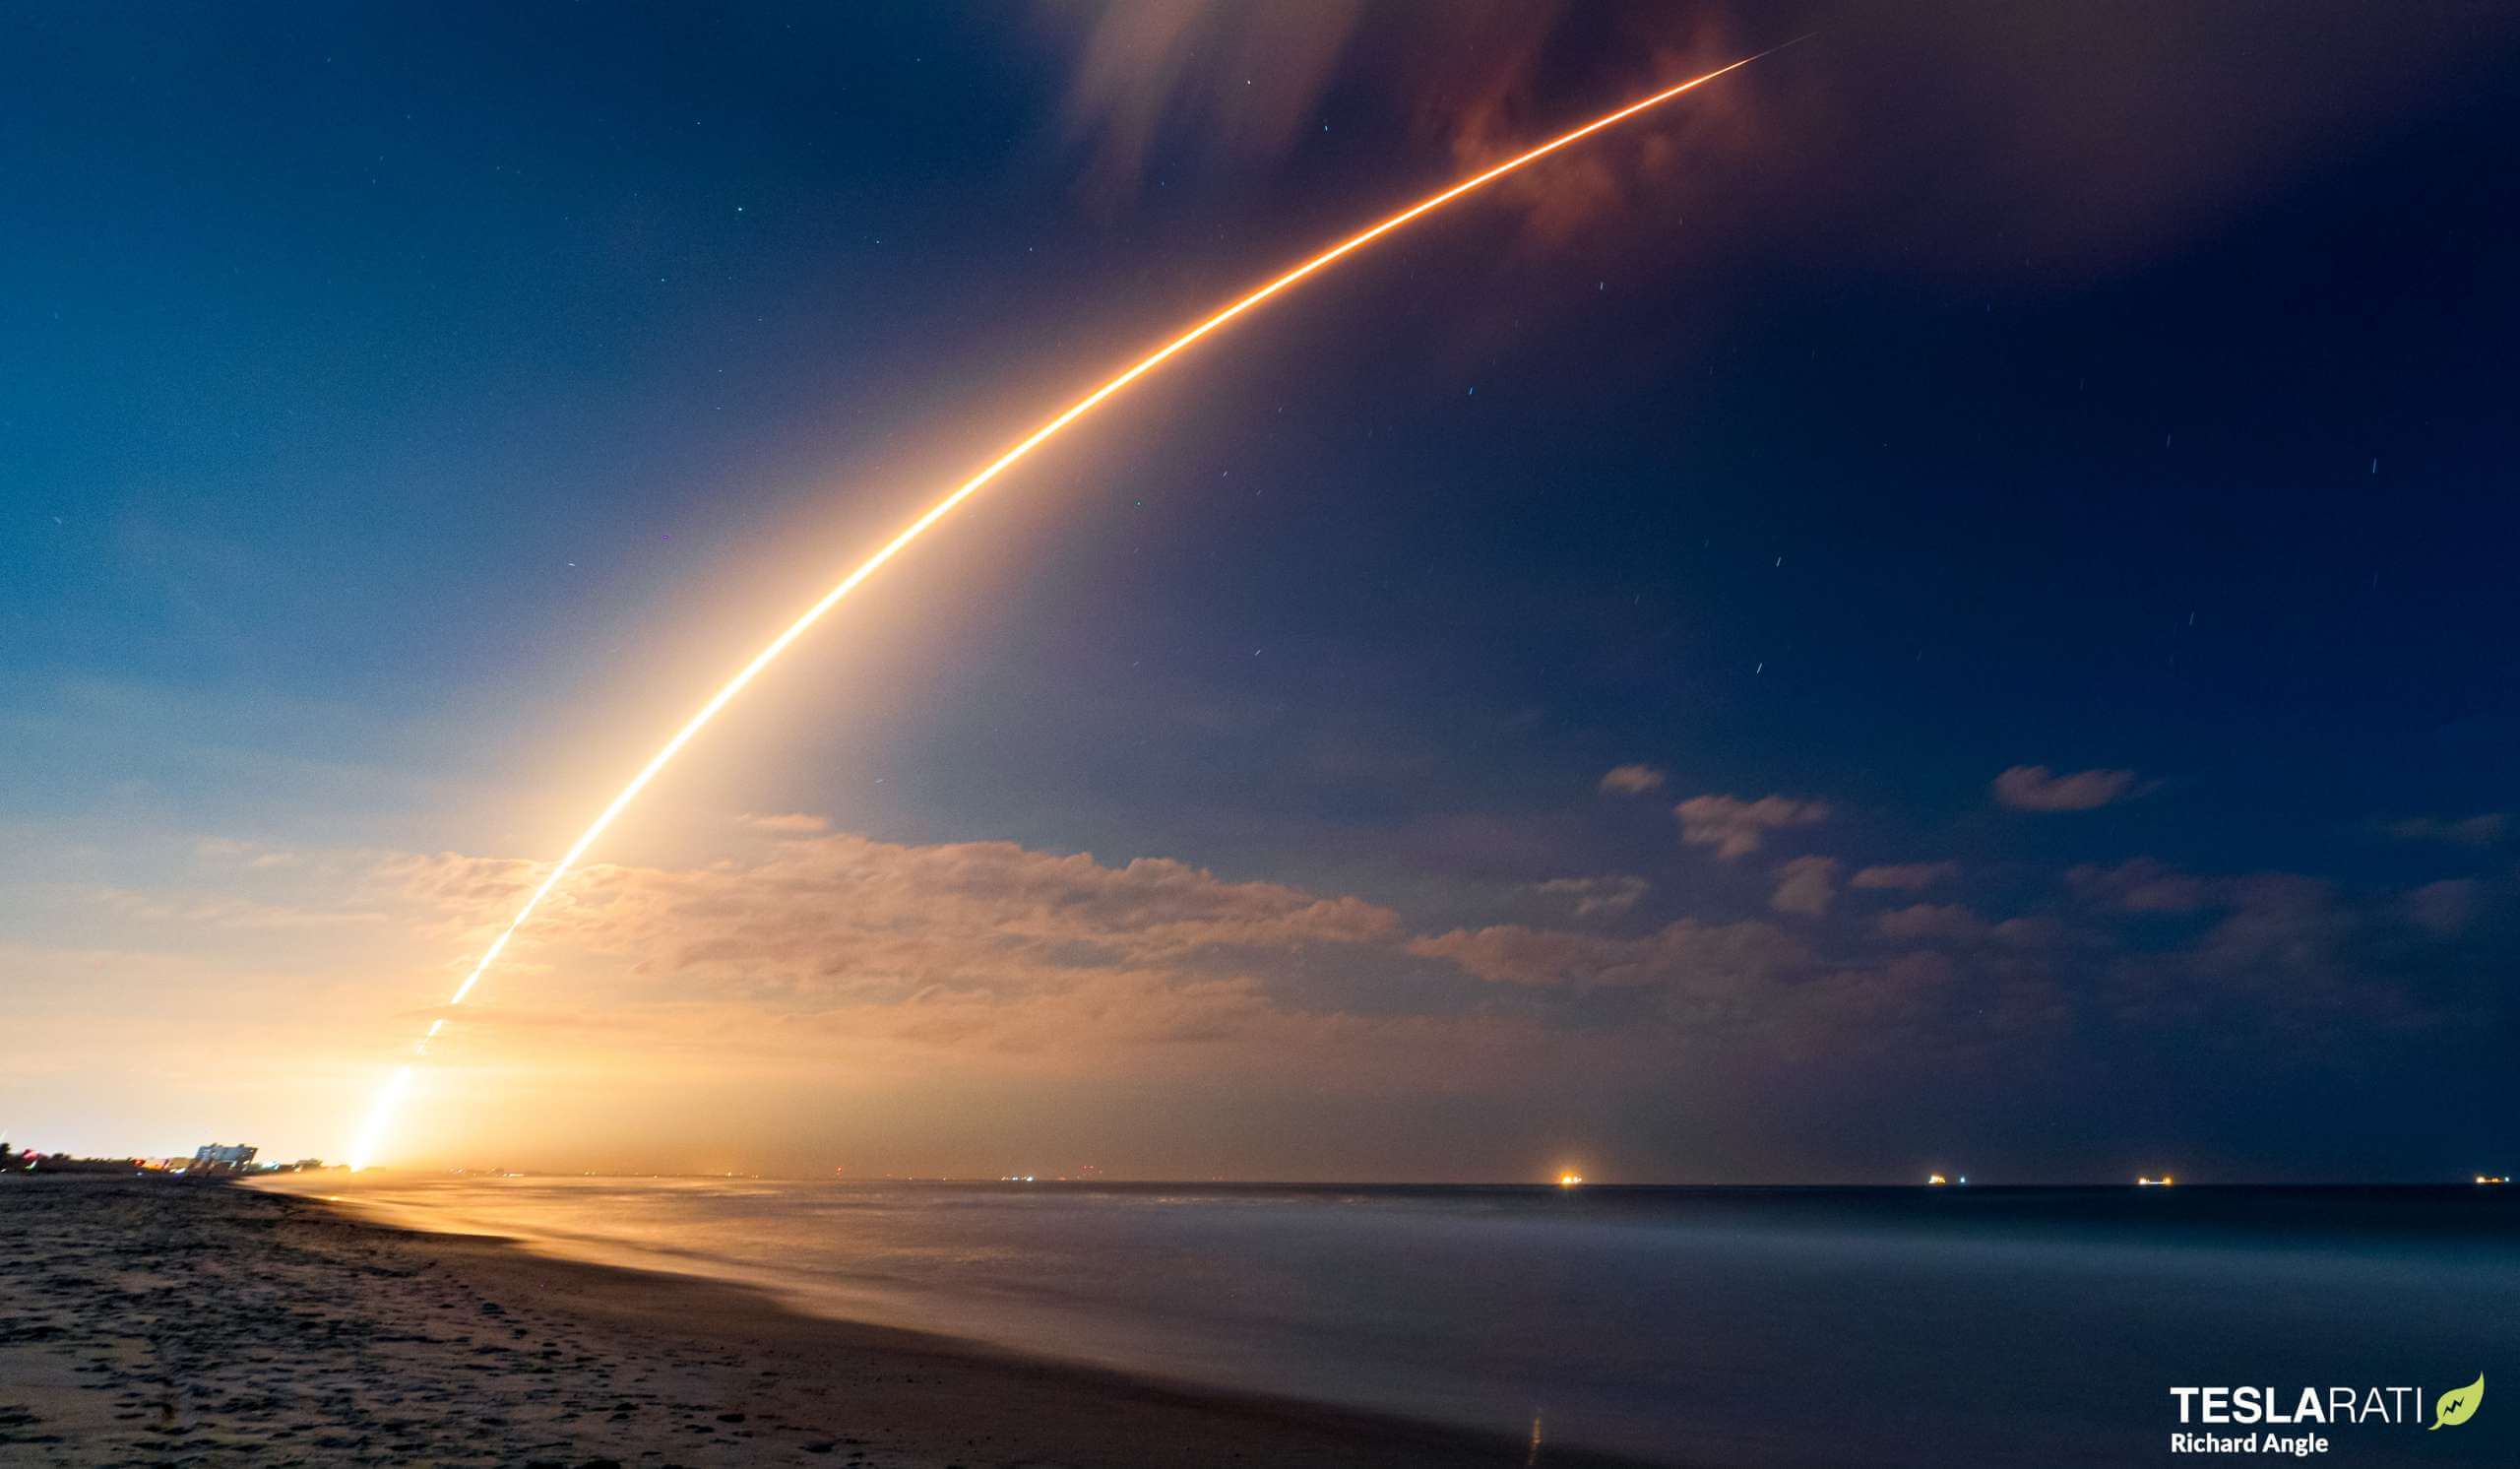 SpaceXブースターB1069がグループ6-9スターリンクミッションの打ち上げに成功